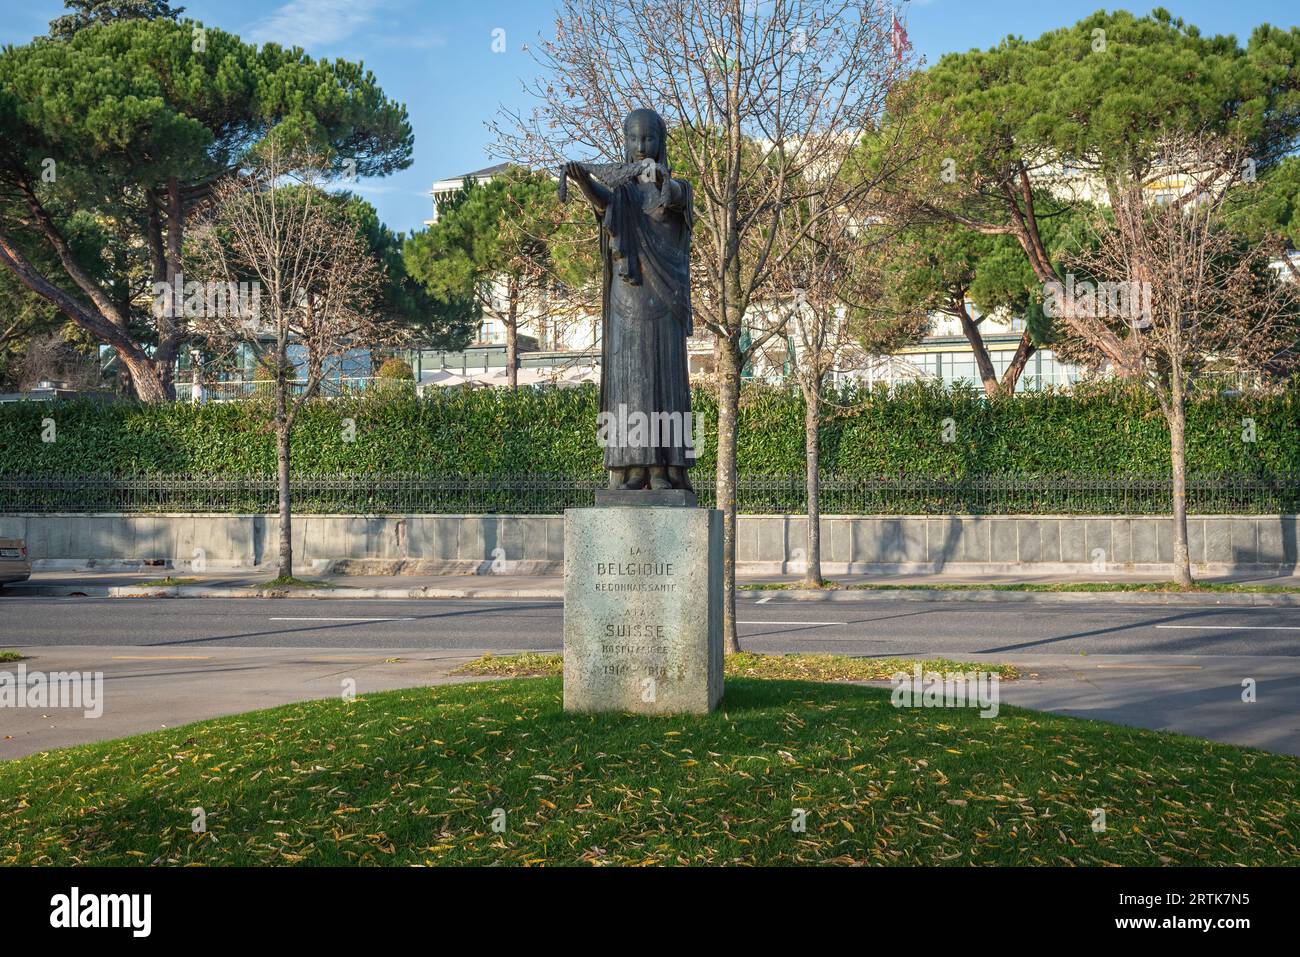 La Belgique reconnaissante Monument (Grateful Belgium) von Ernest Wijnants - Lausanne, Schweiz Stockfoto